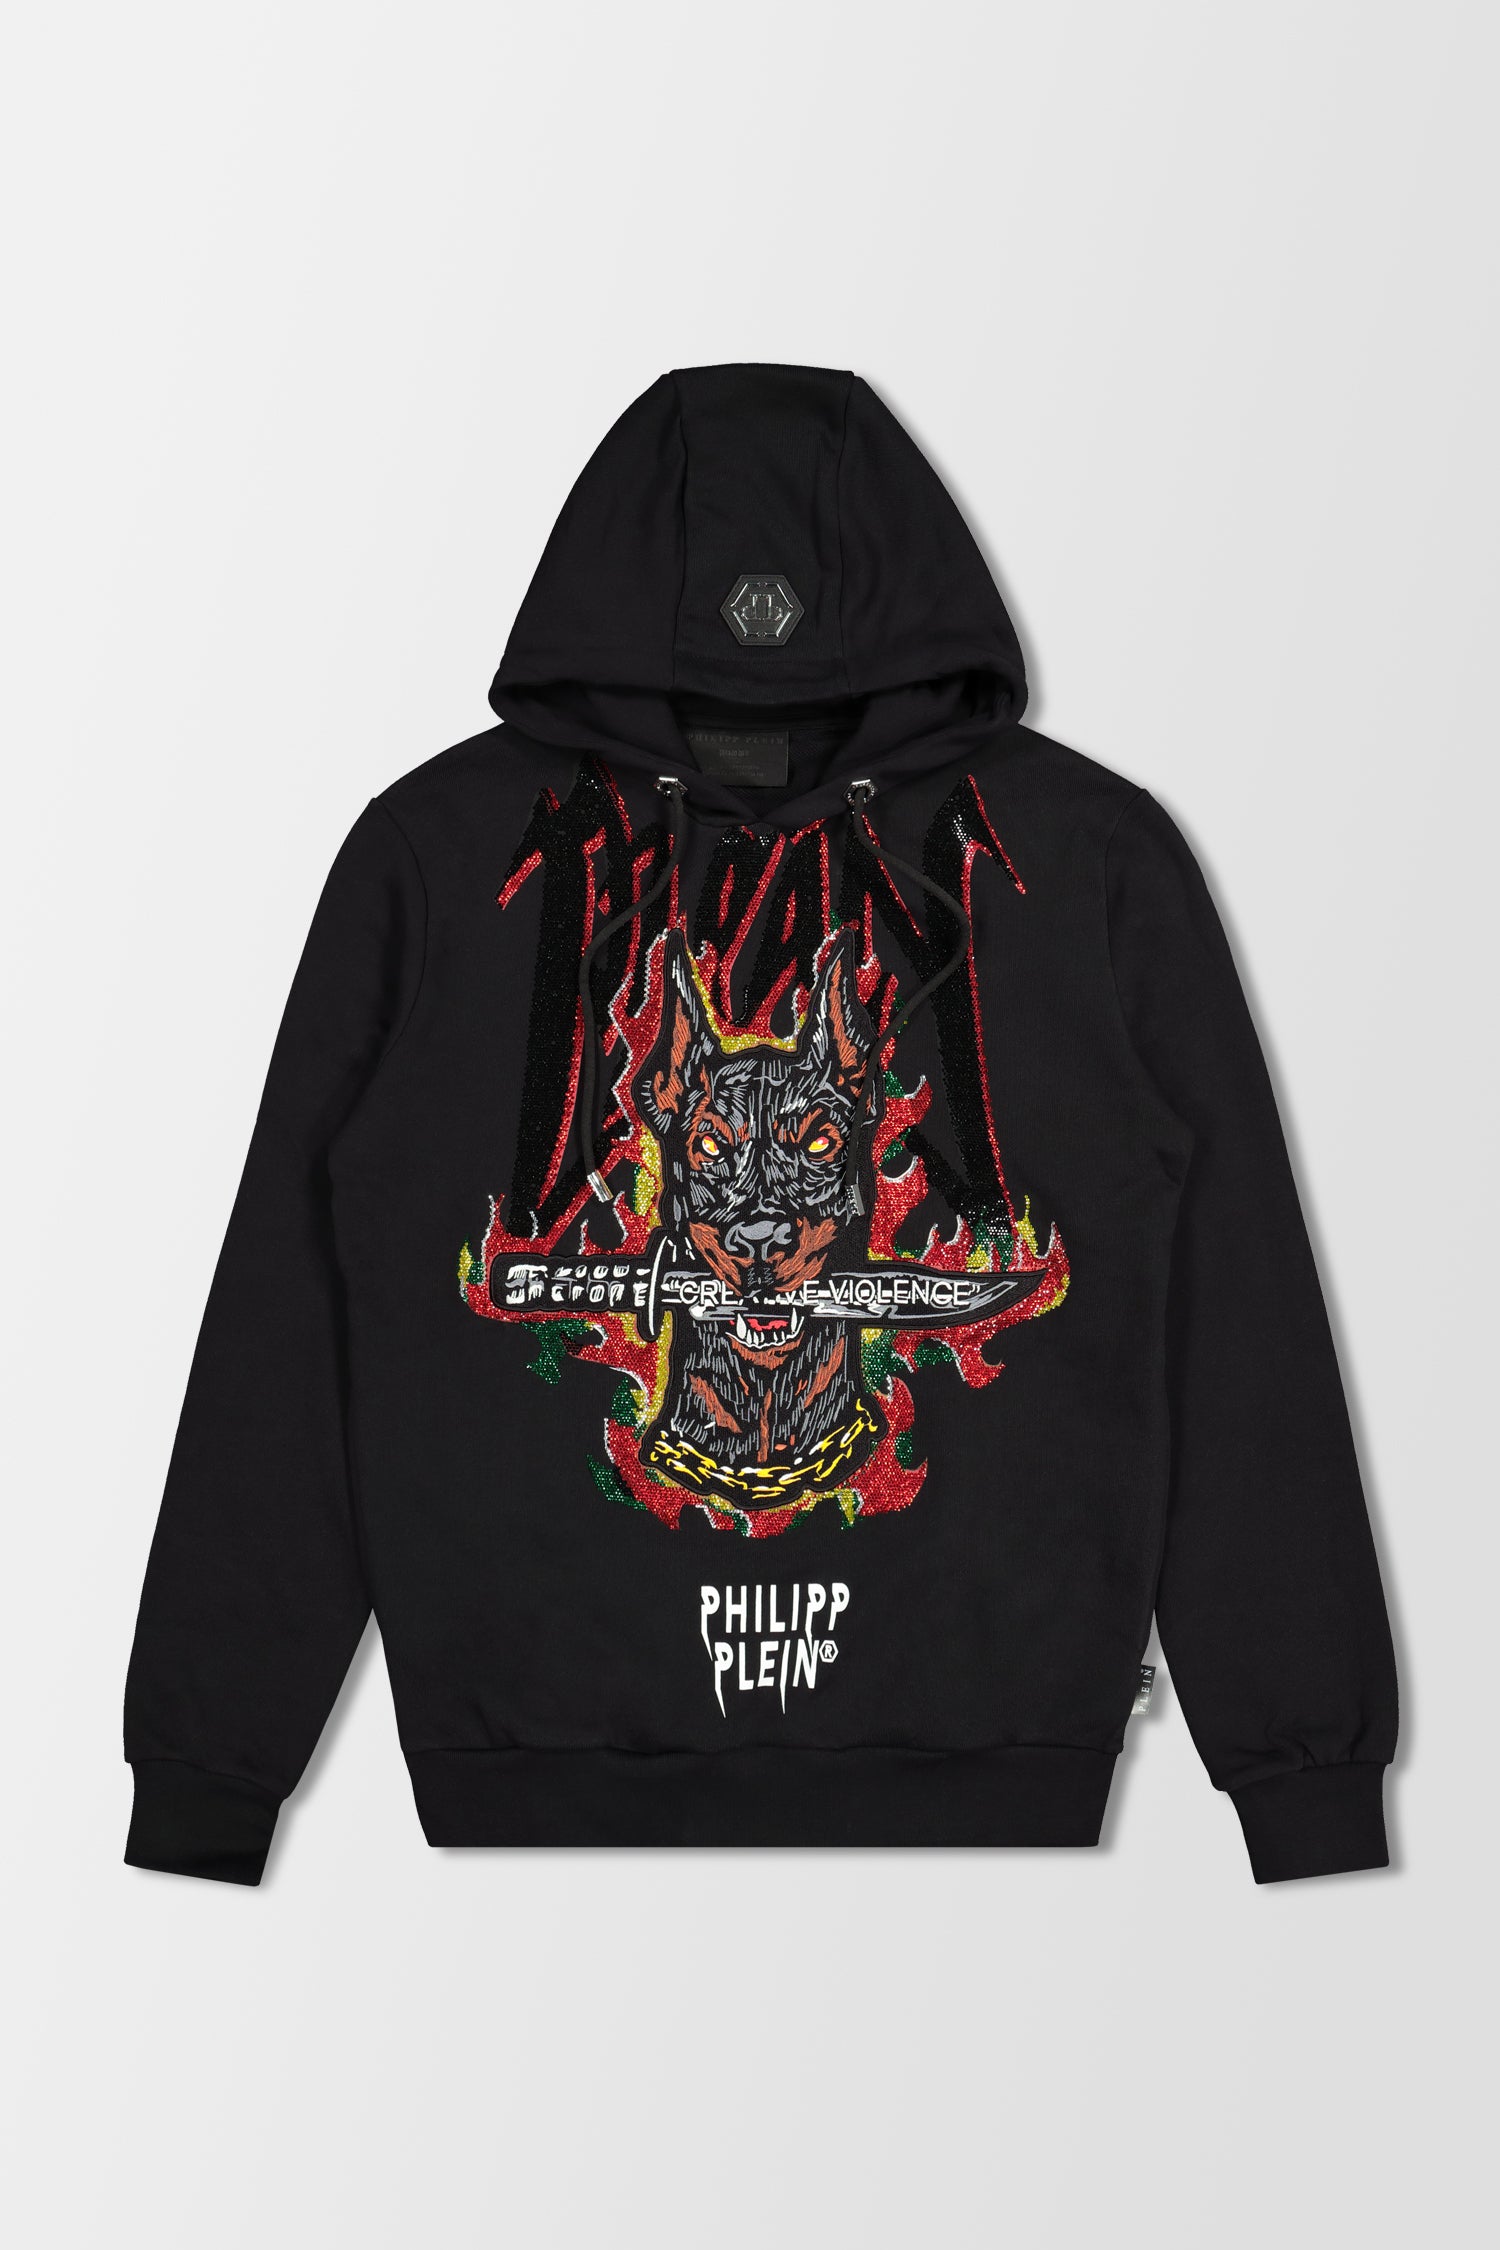 Philipp Plein Black Graffiti Hoodie Sweatshirt